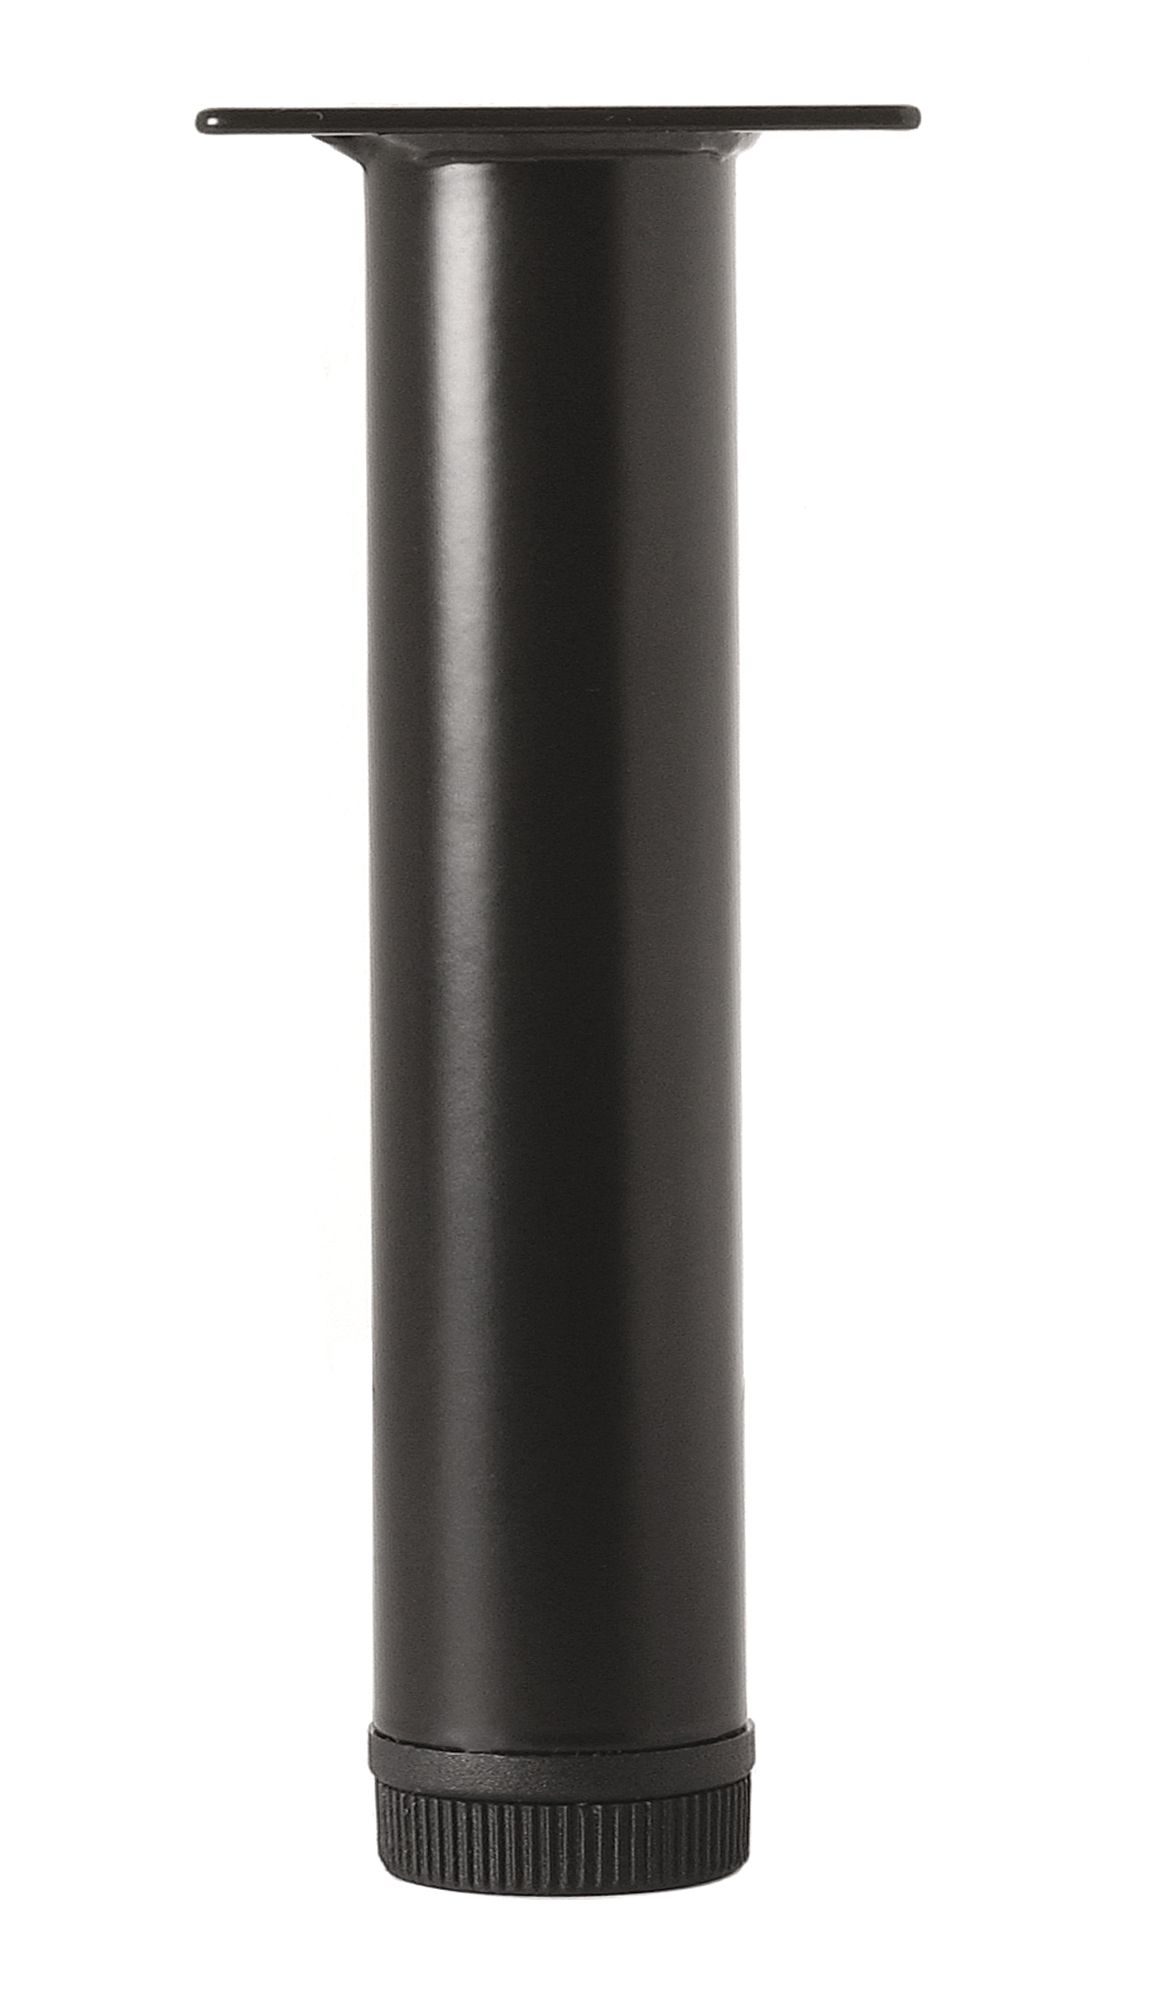 Rothley Painted Black Furniture leg (H)150mm (Dia)32mm